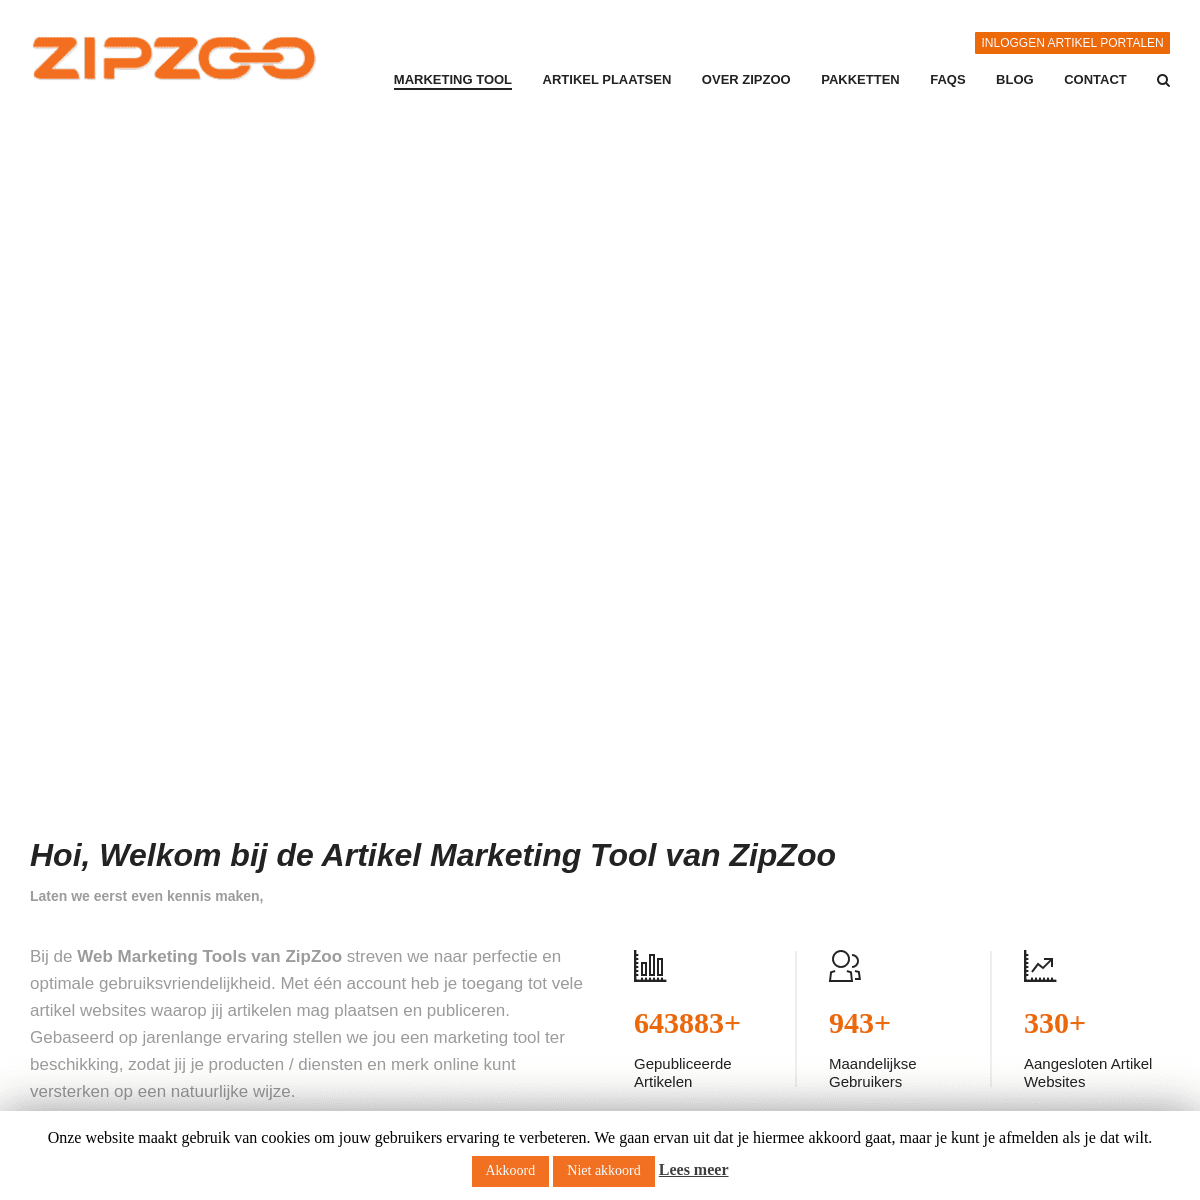 A complete backup of zipzoo.nl